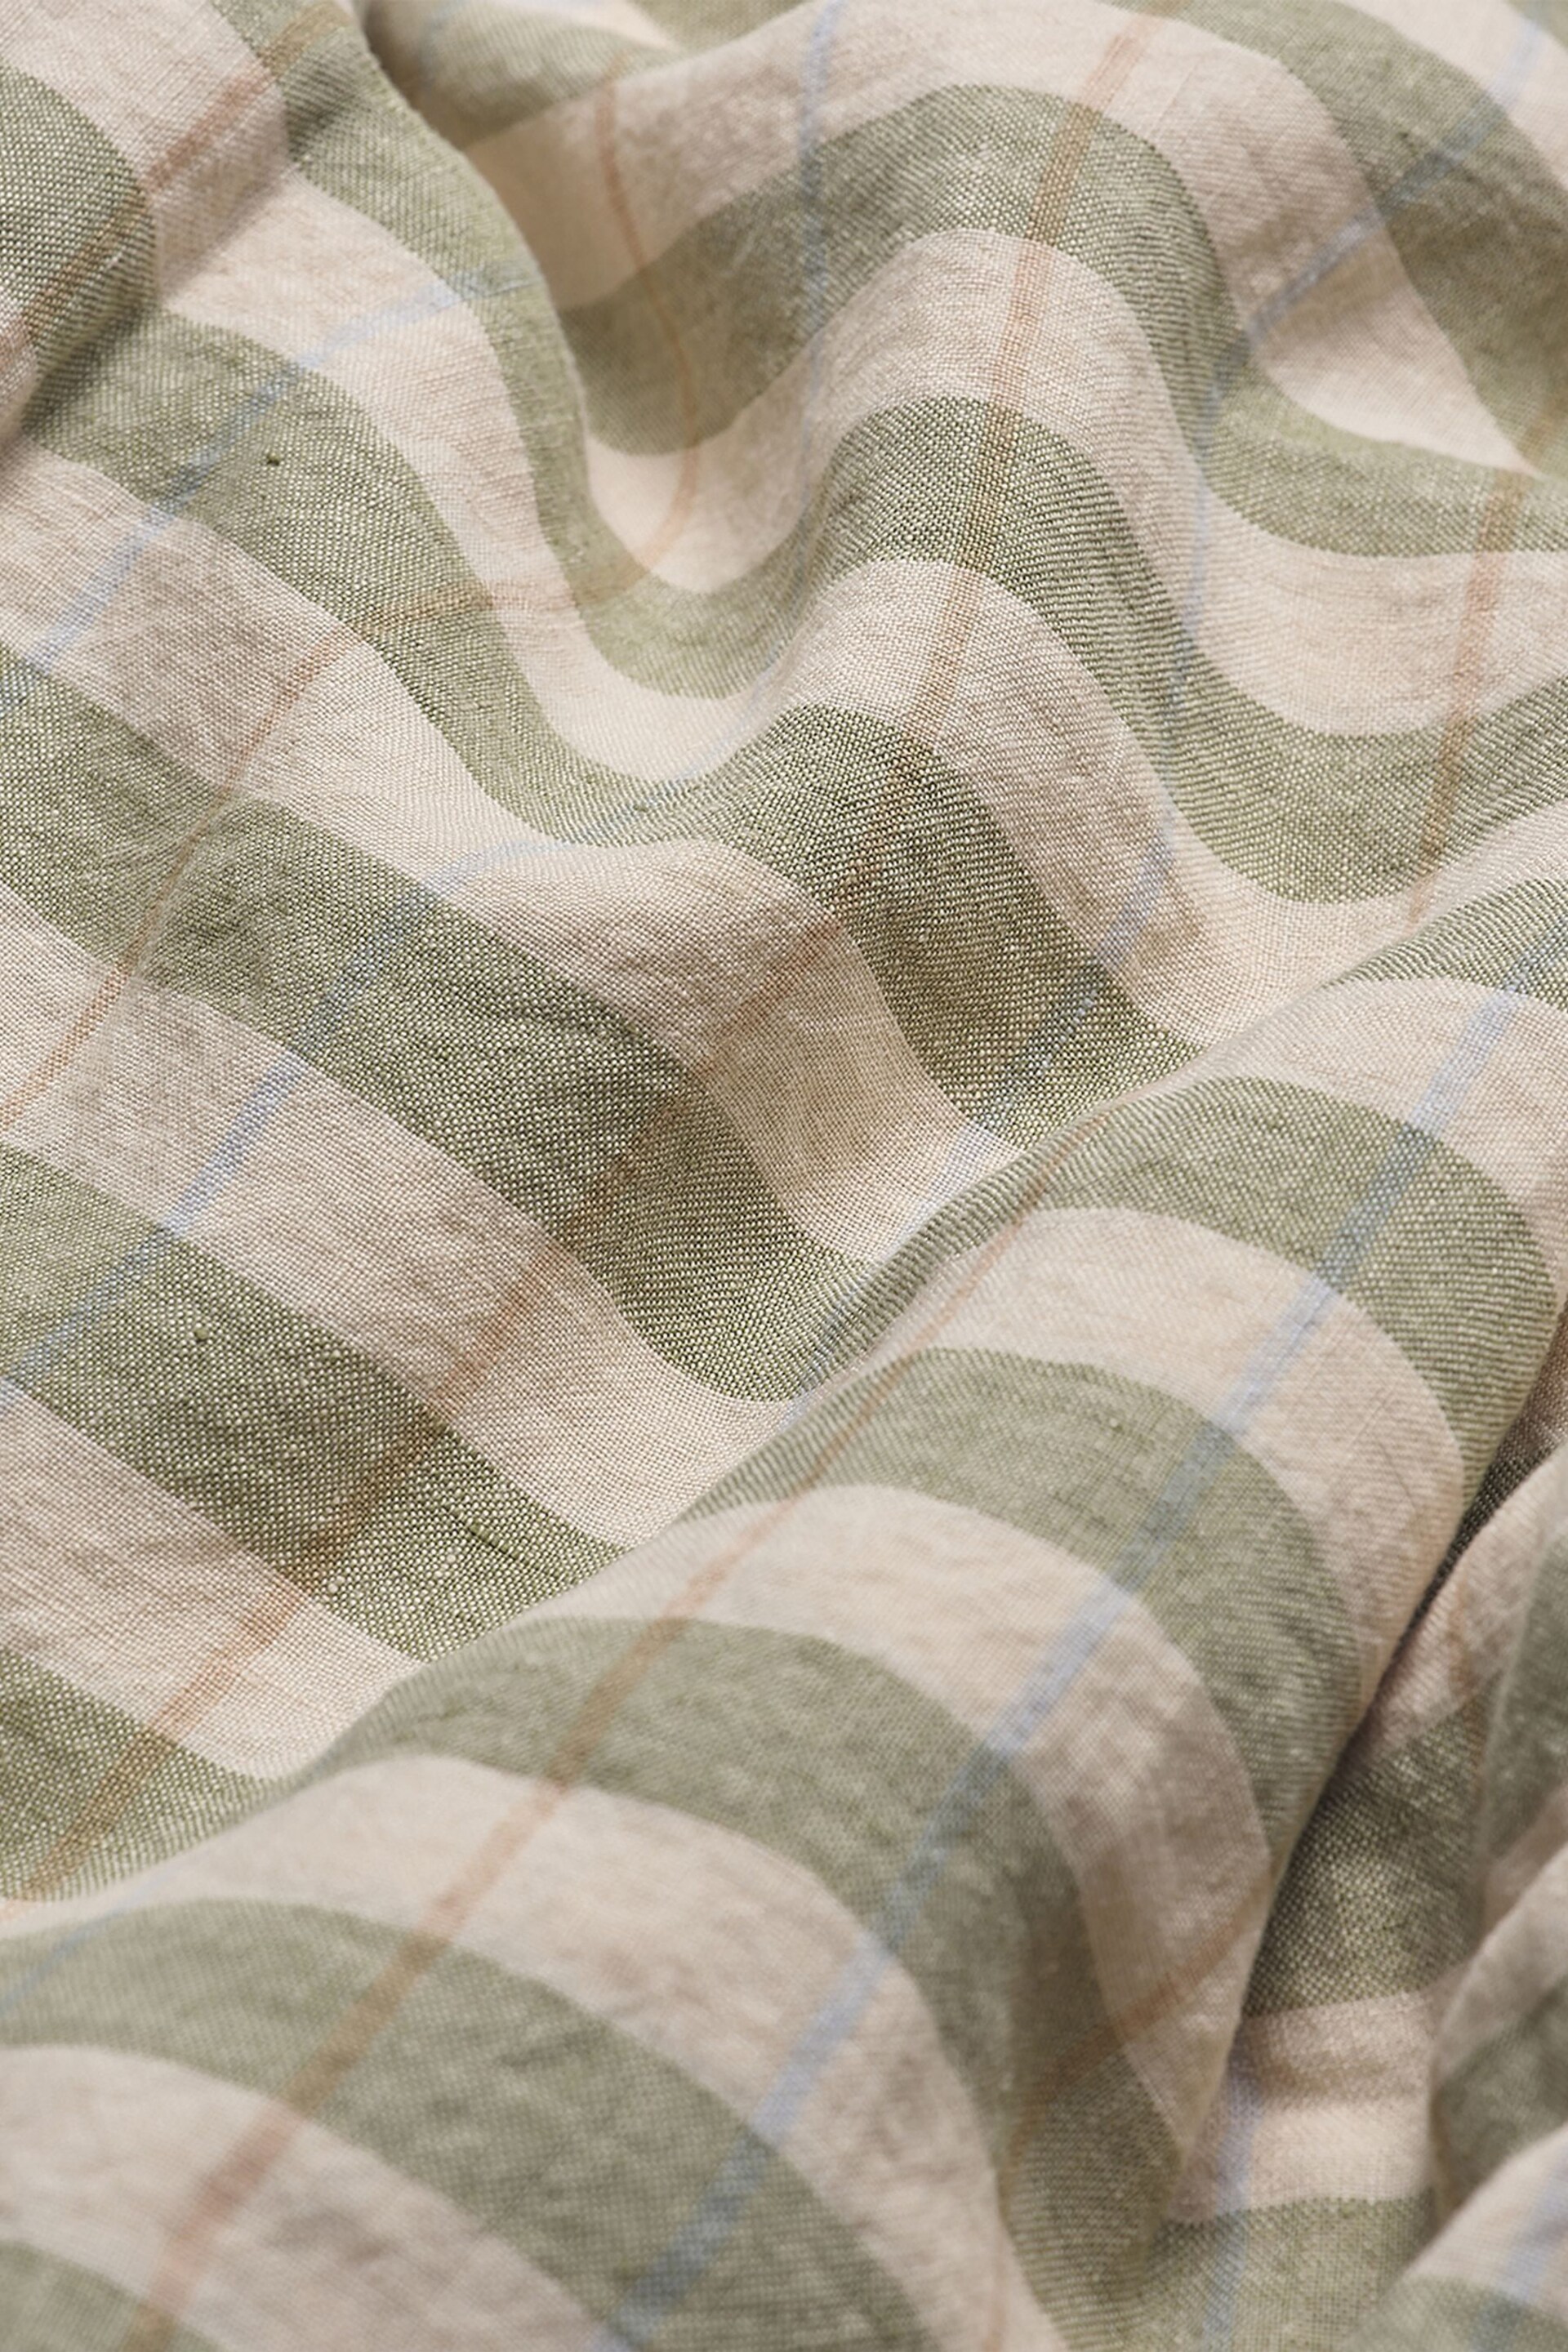 Piglet in Bed Pear Check Stripe Linen Duvet Cover - Image 2 of 2